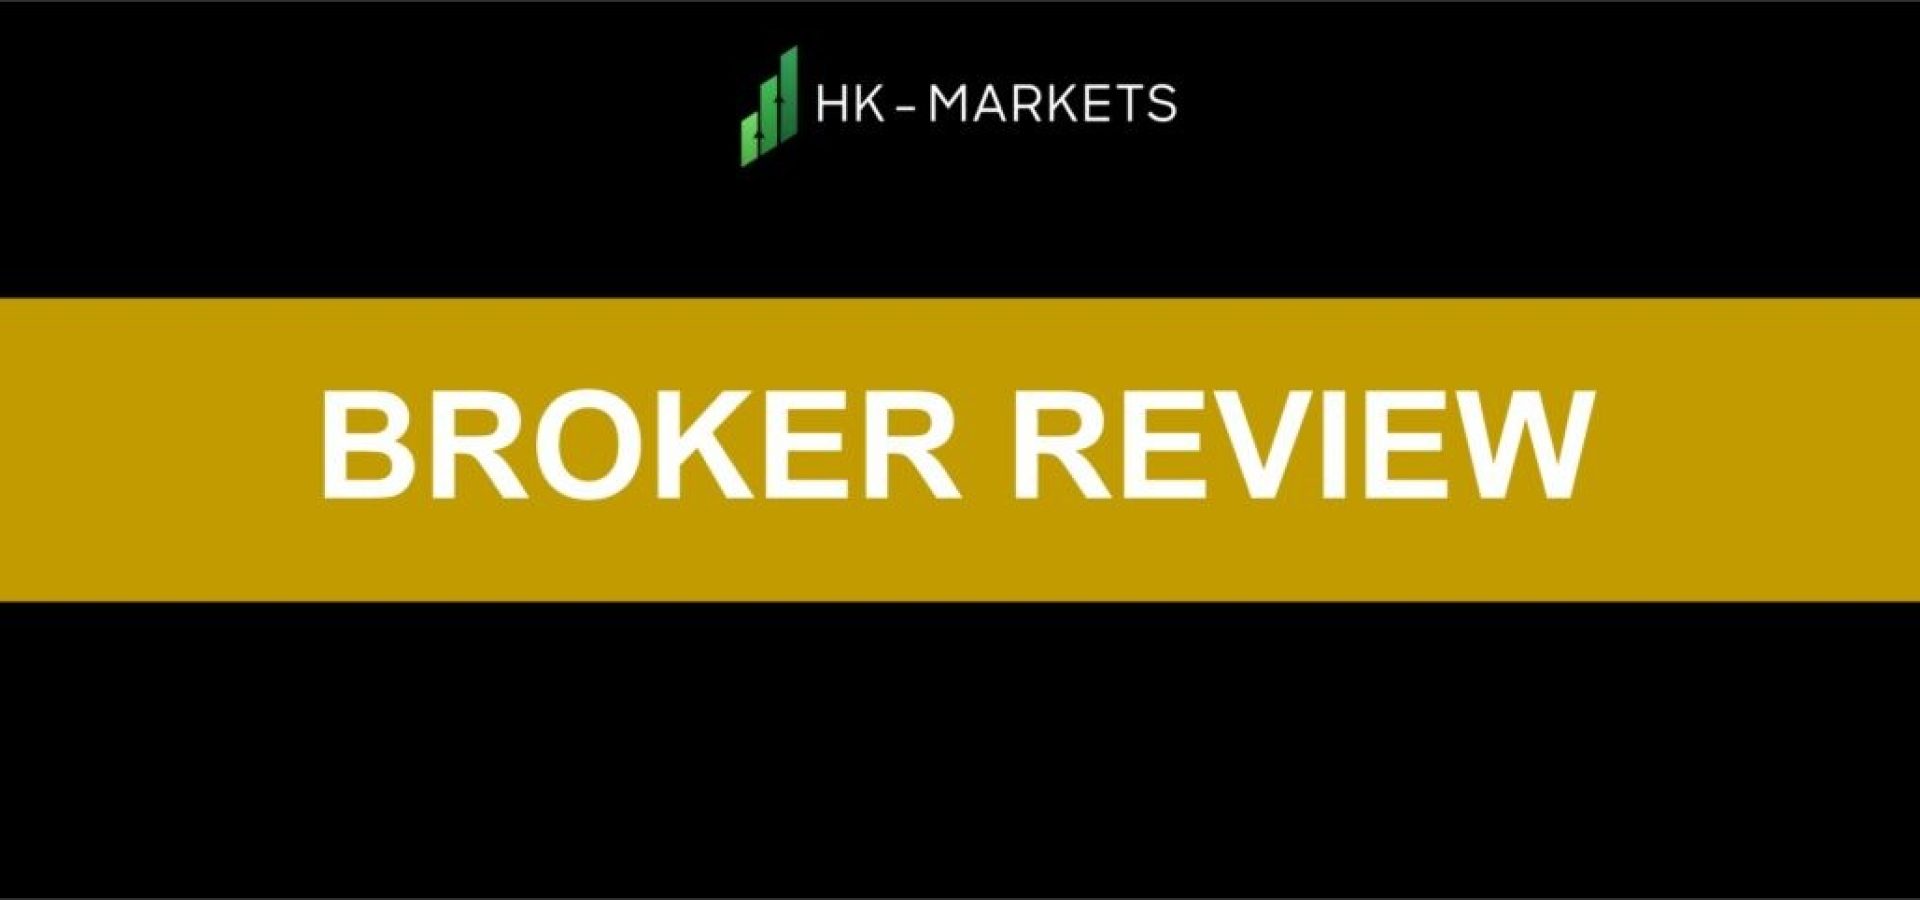 Hk-markets Review